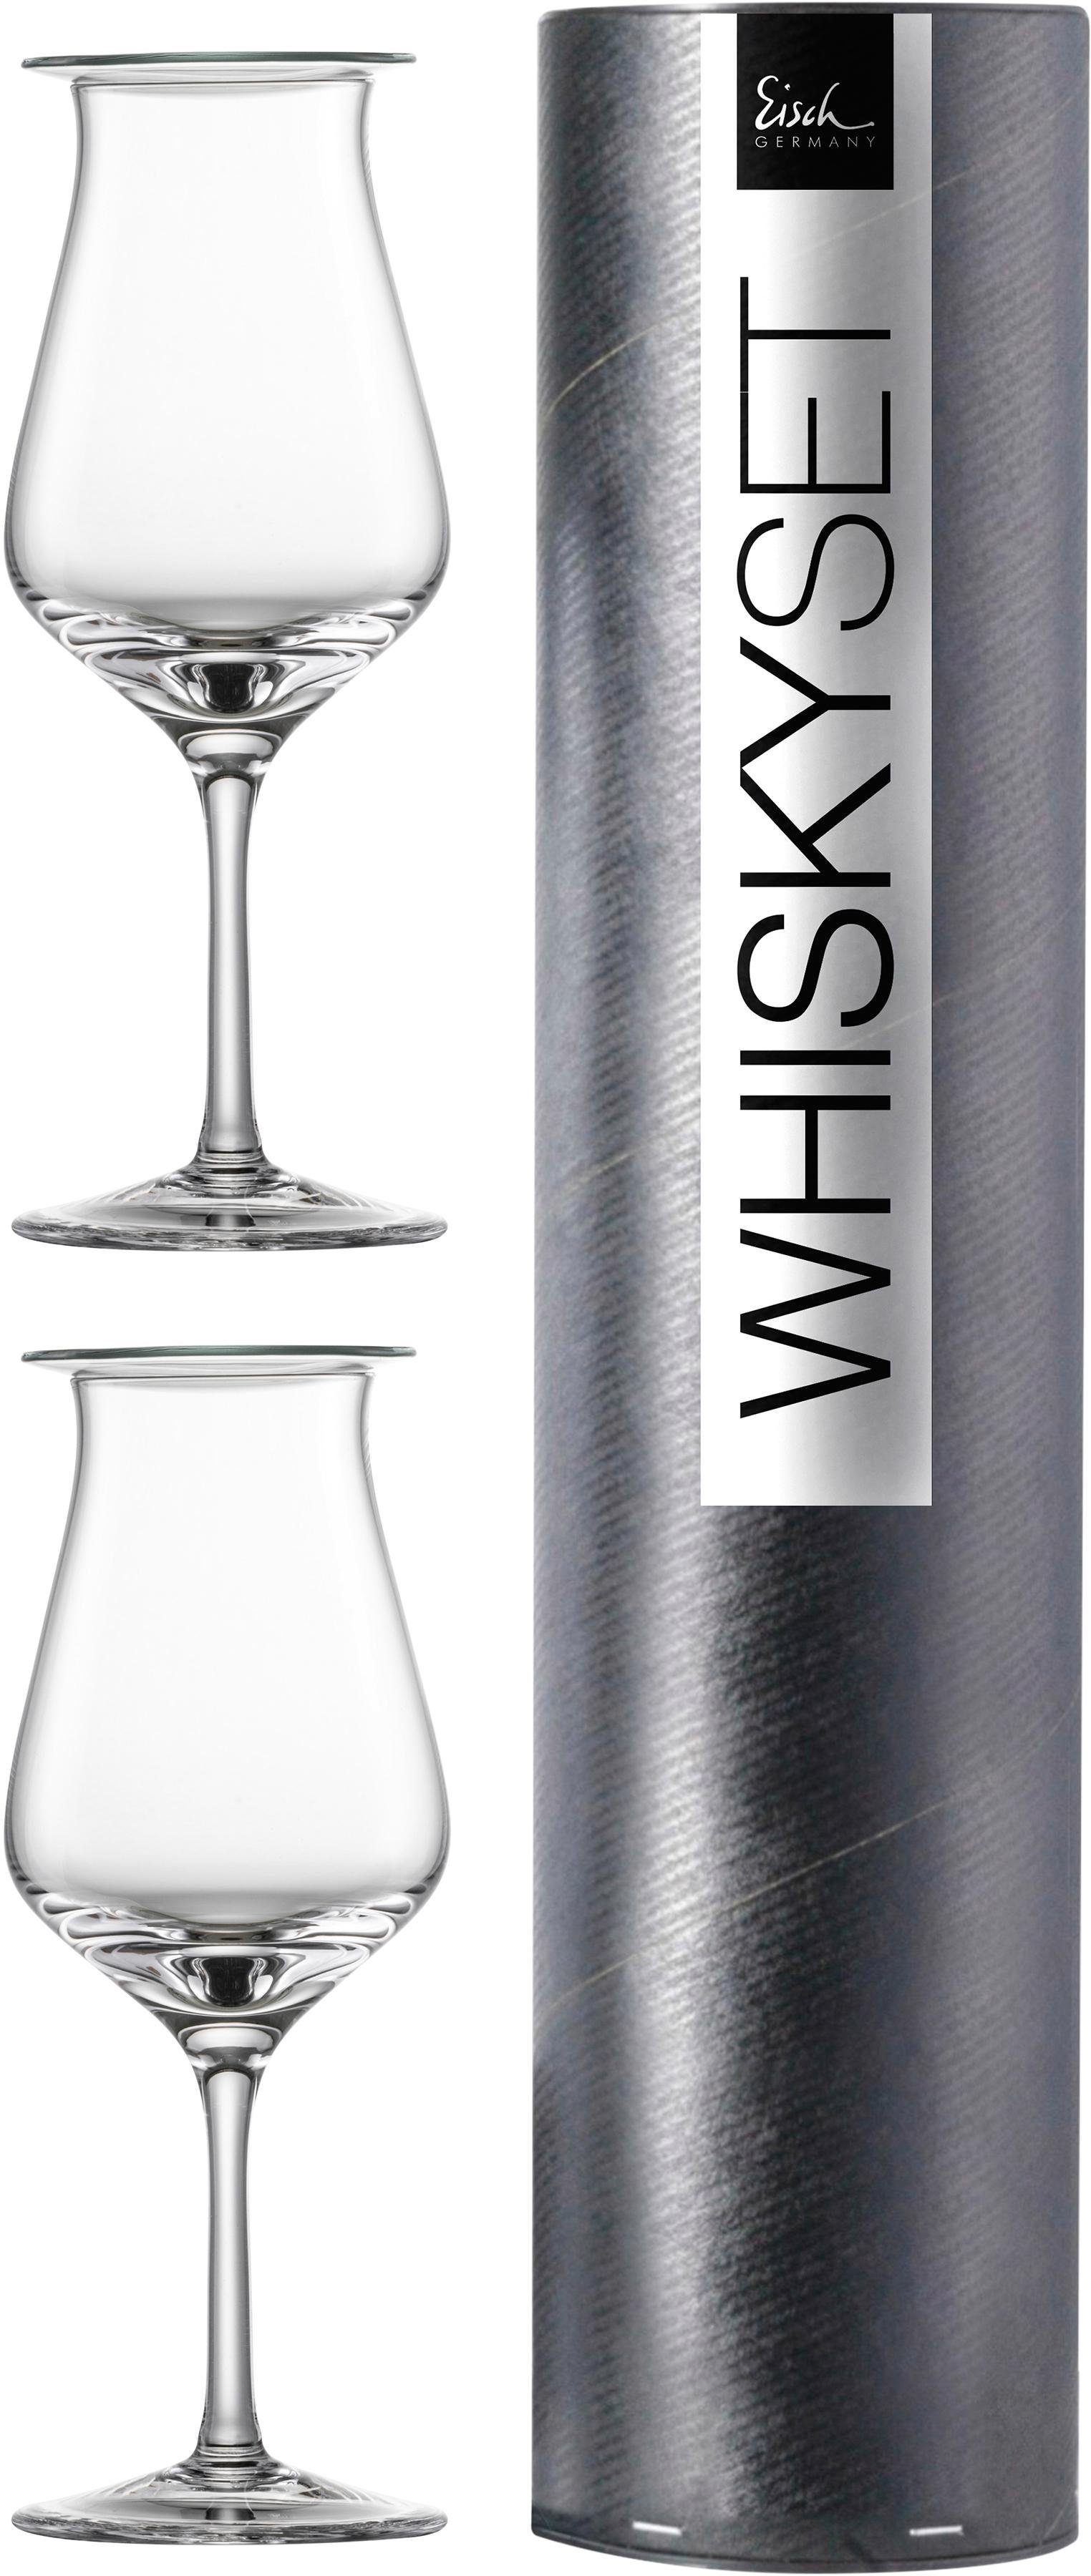 Eisch Whiskyglas Jeunesse, Kristallglas, 160 bleifrei, 4-teilig ml